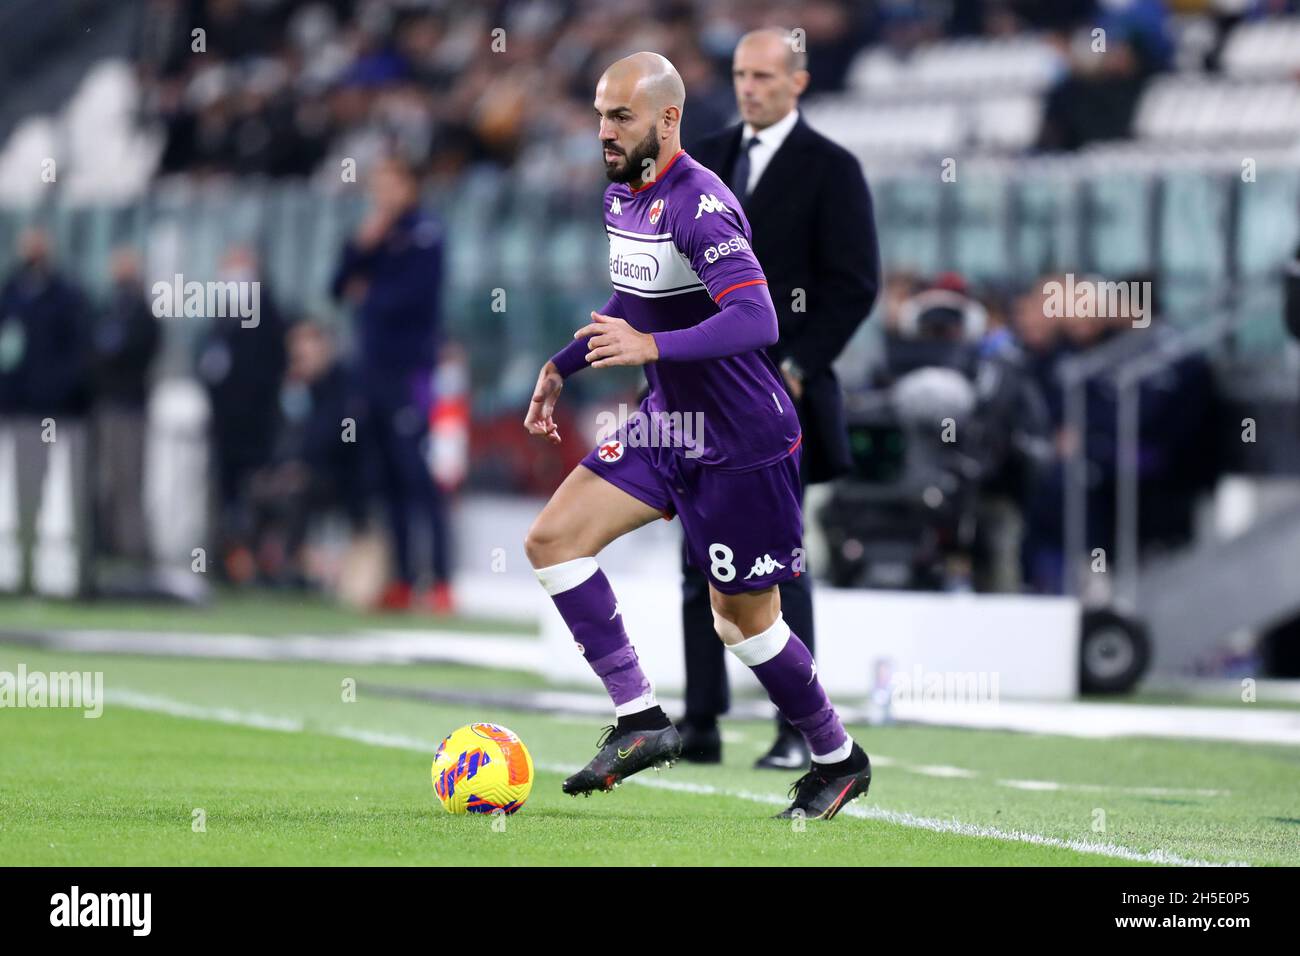 Riccardo Saponara of Acf Fiorentina controls the ball during the Serie A  match between Juventus Fc and Acf Fiorentina Stock Photo - Alamy